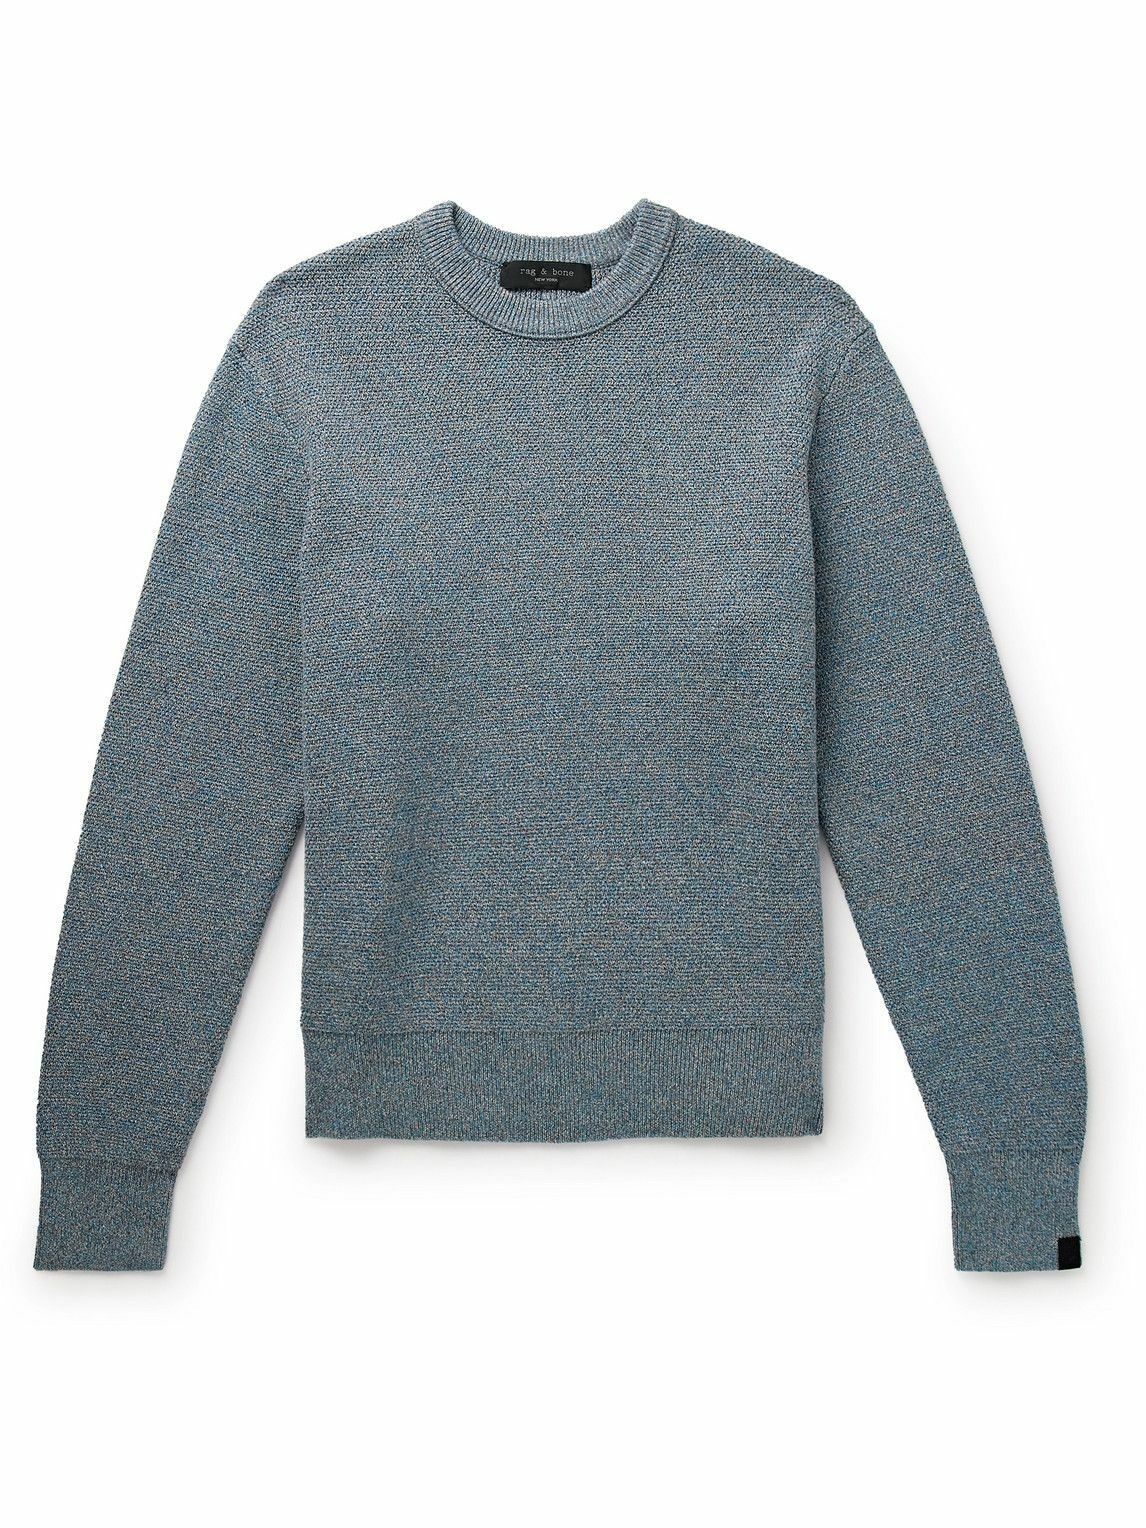 Photo: Rag & Bone - Dexter Organic Cotton-Blend Sweater - Blue